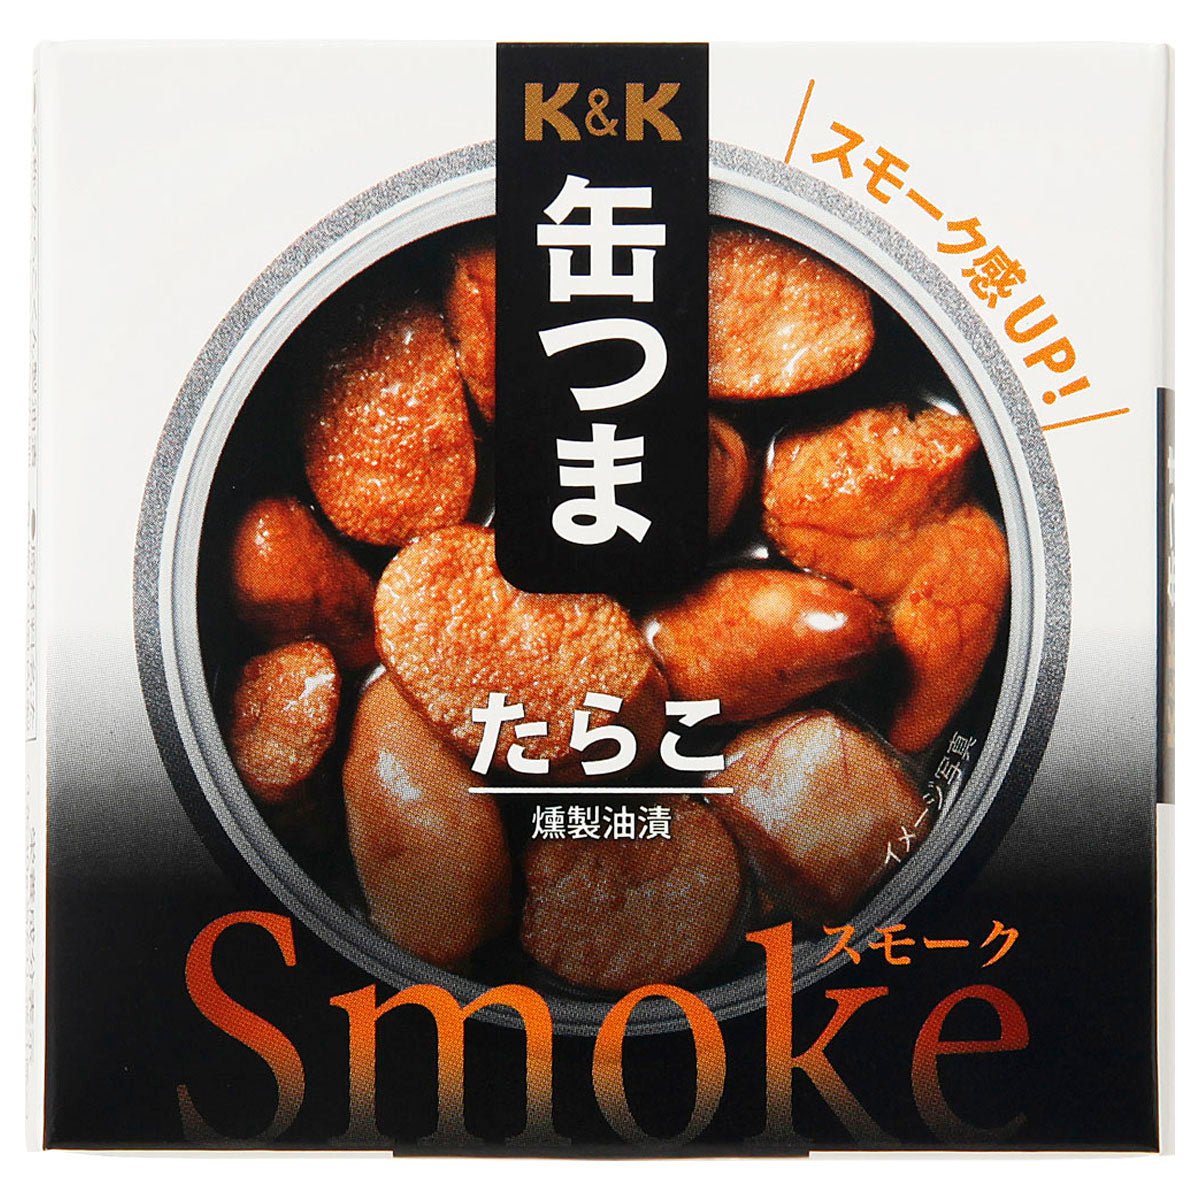 K & k puede tsuma fumar tarako